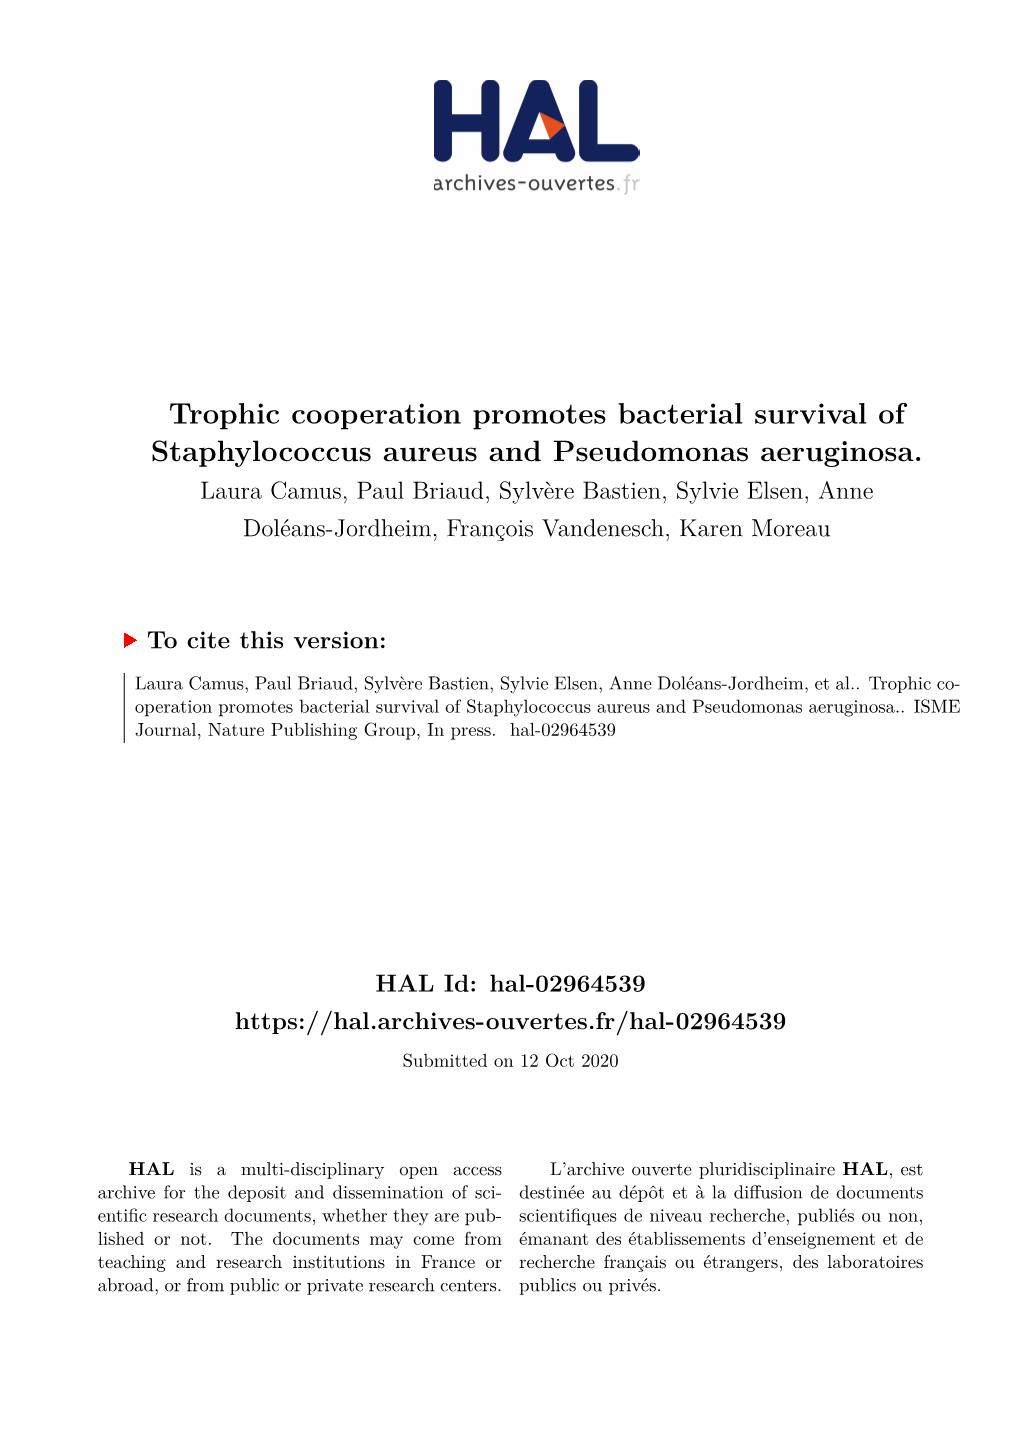 Trophic Cooperation Promotes Bacterial Survival of Staphylococcus Aureus and Pseudomonas Aeruginosa